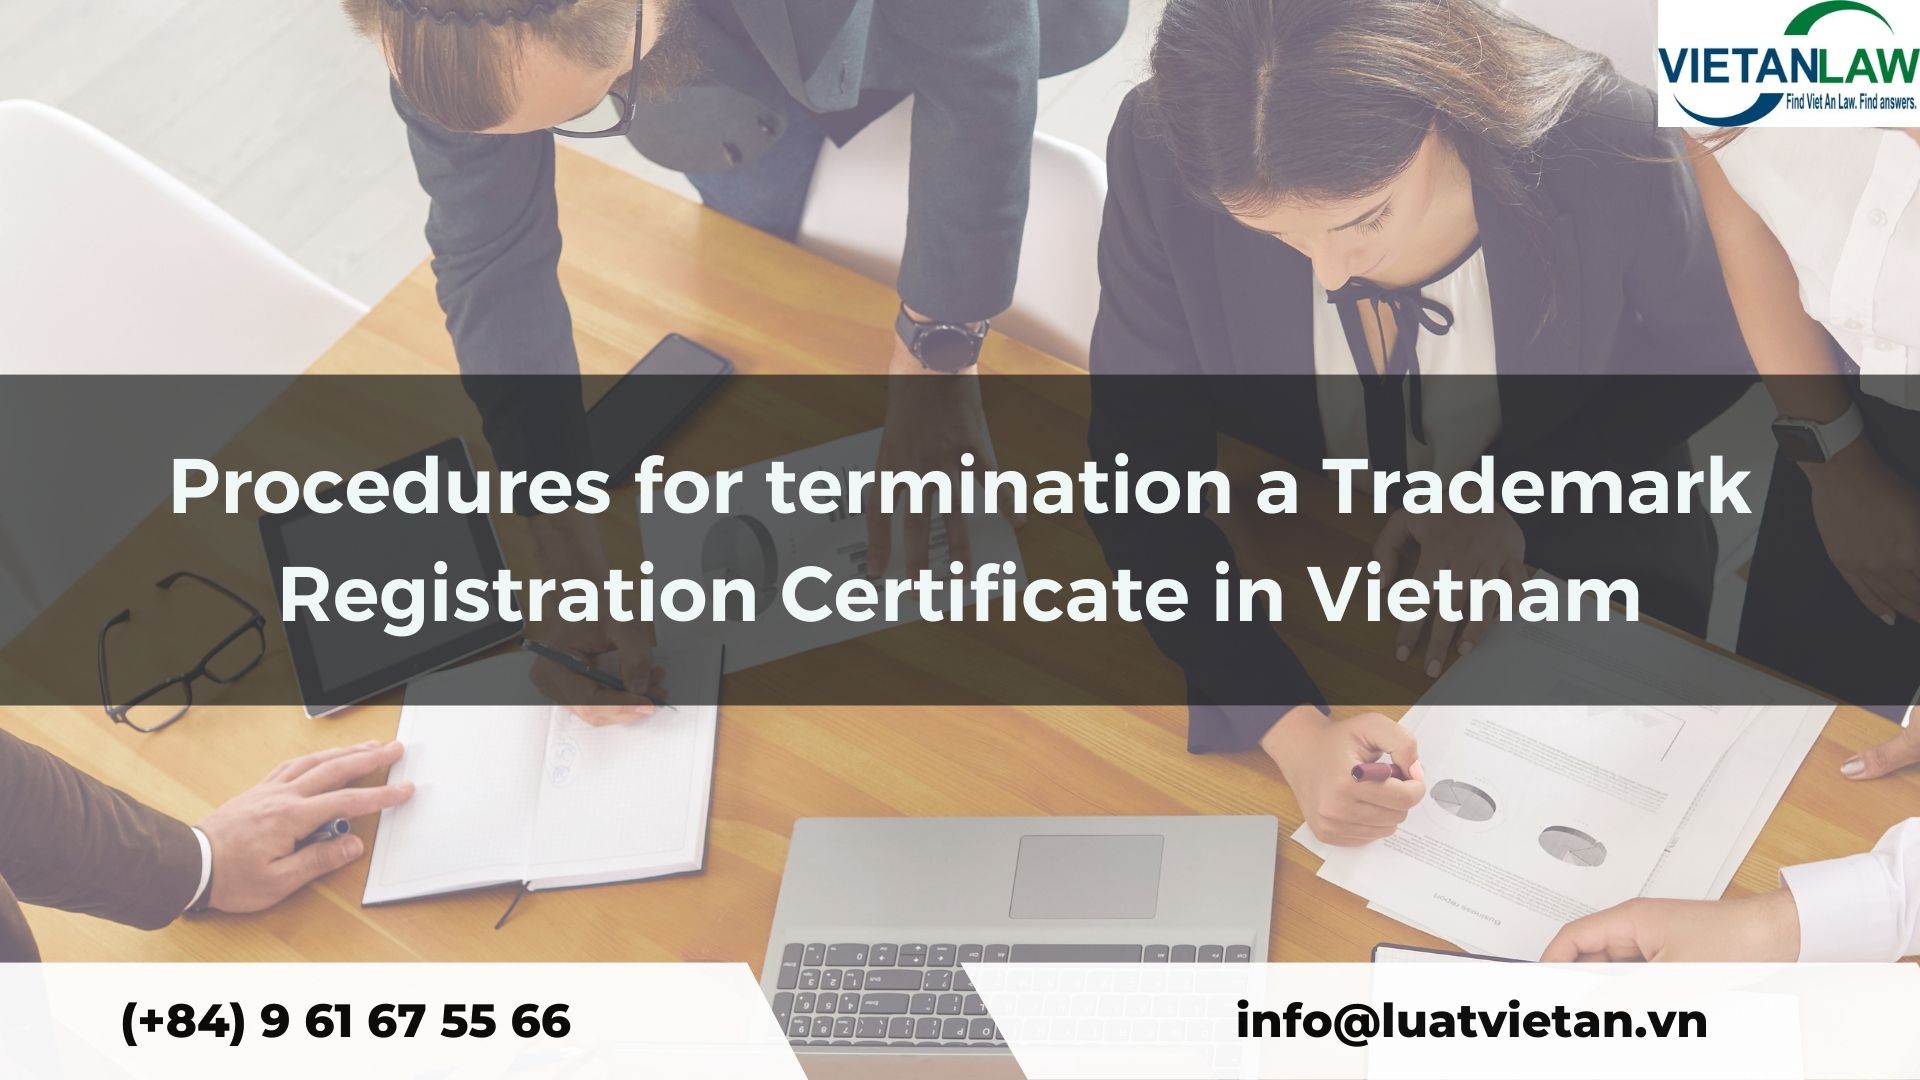 Procedures for termination a Trademark Registration Certificate in Vietnam